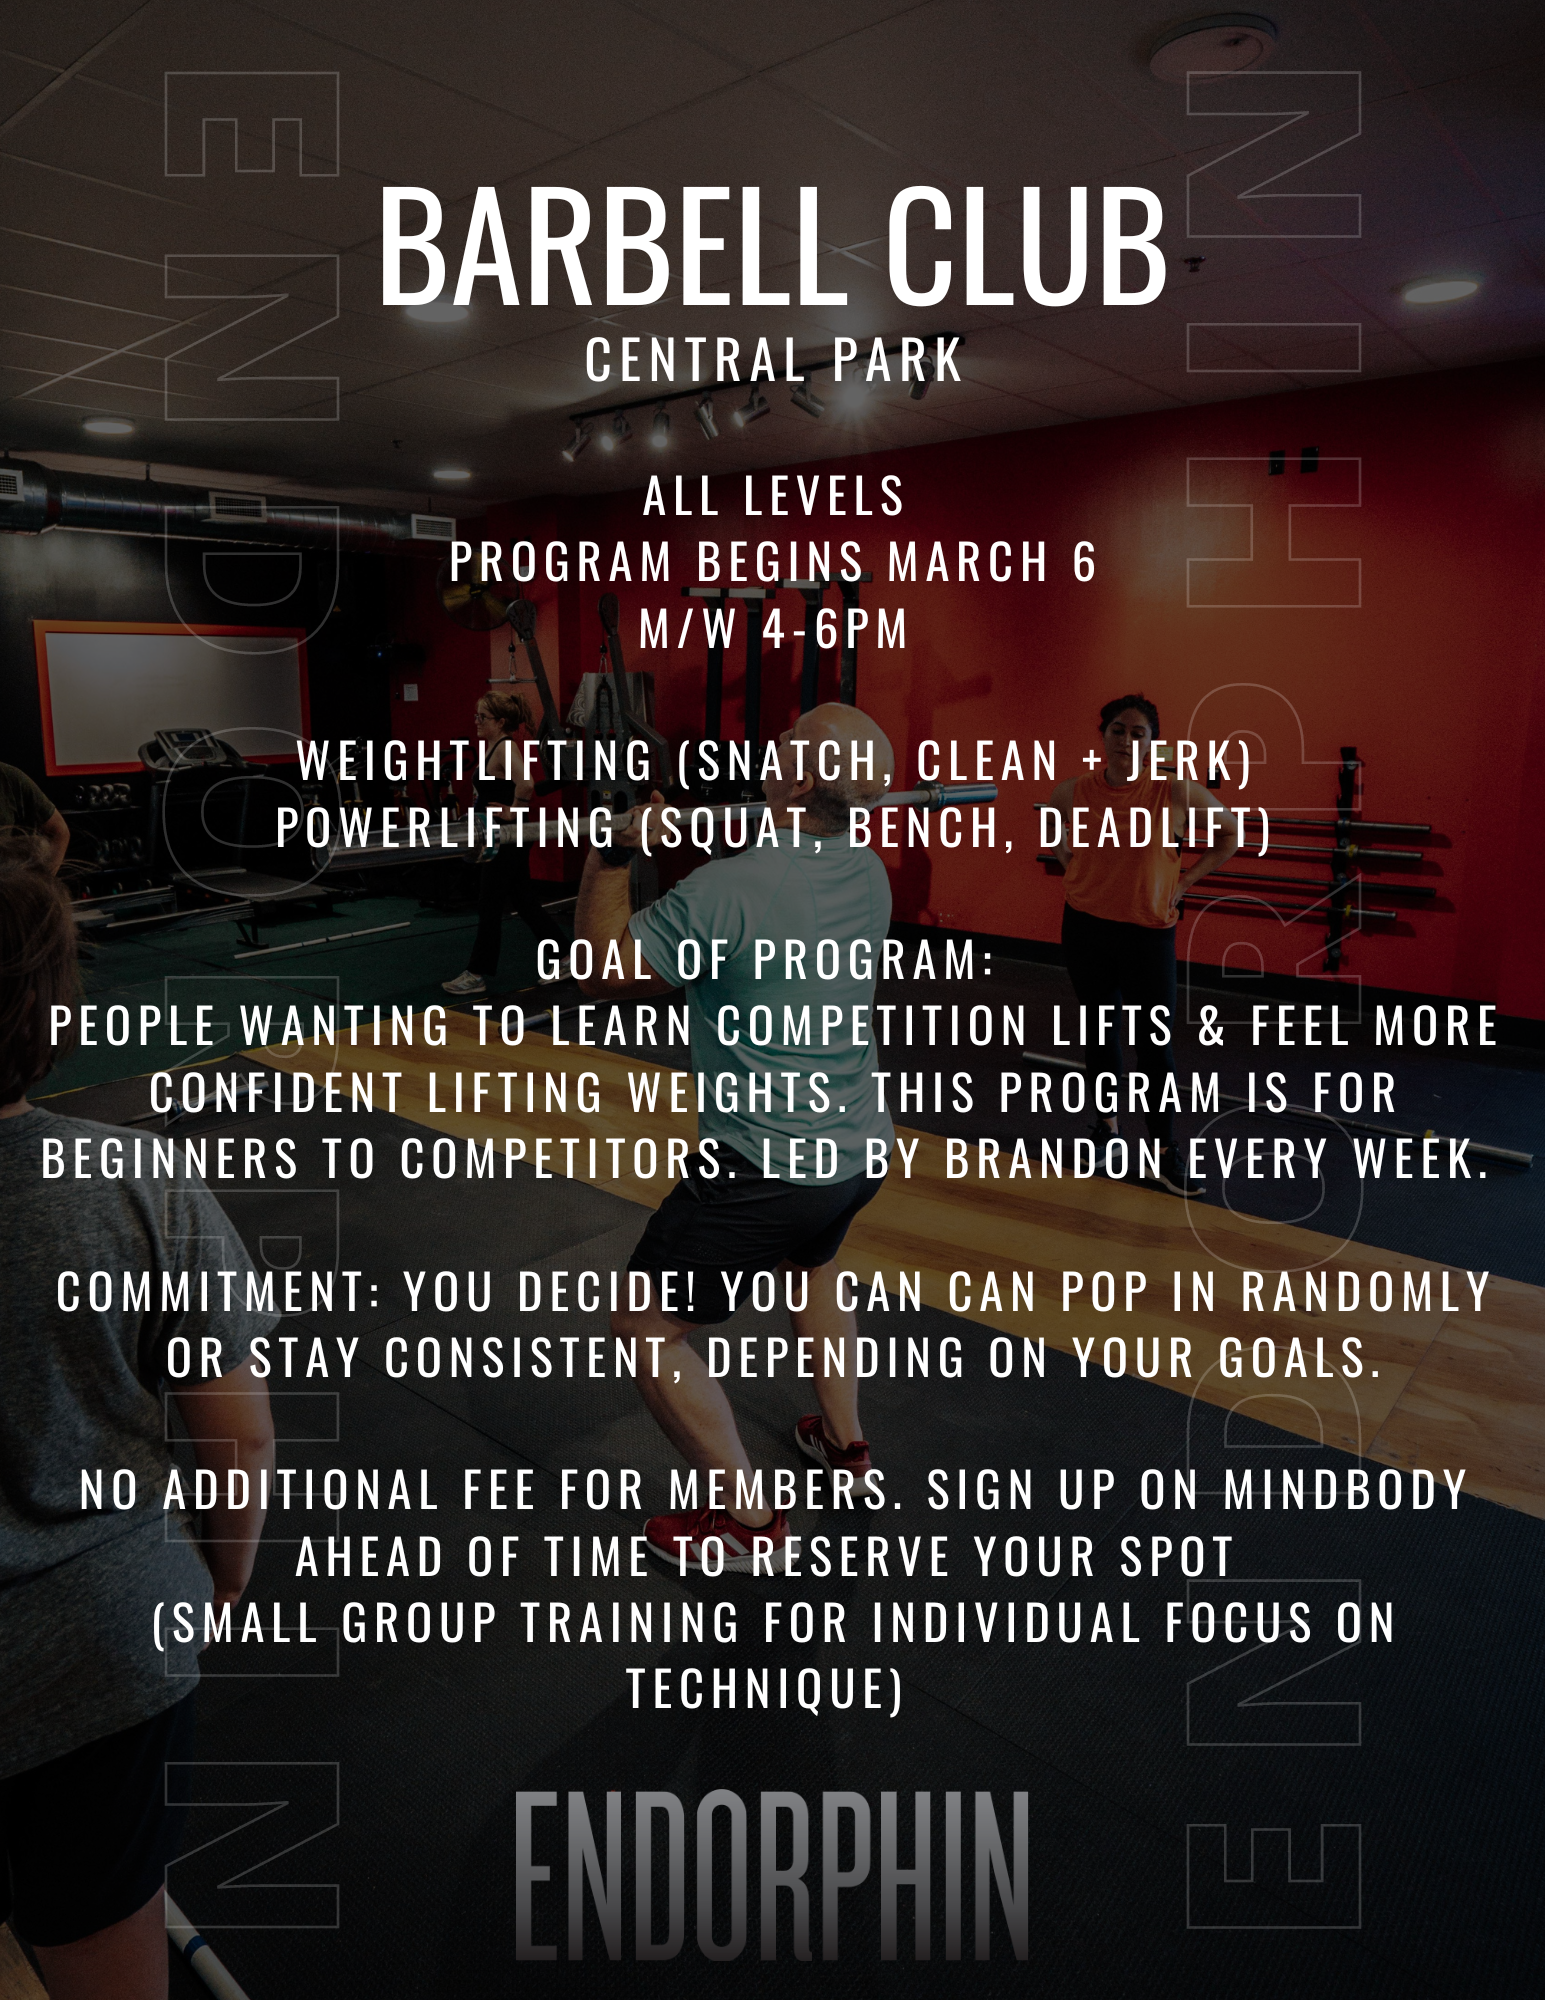 
Barbell Club